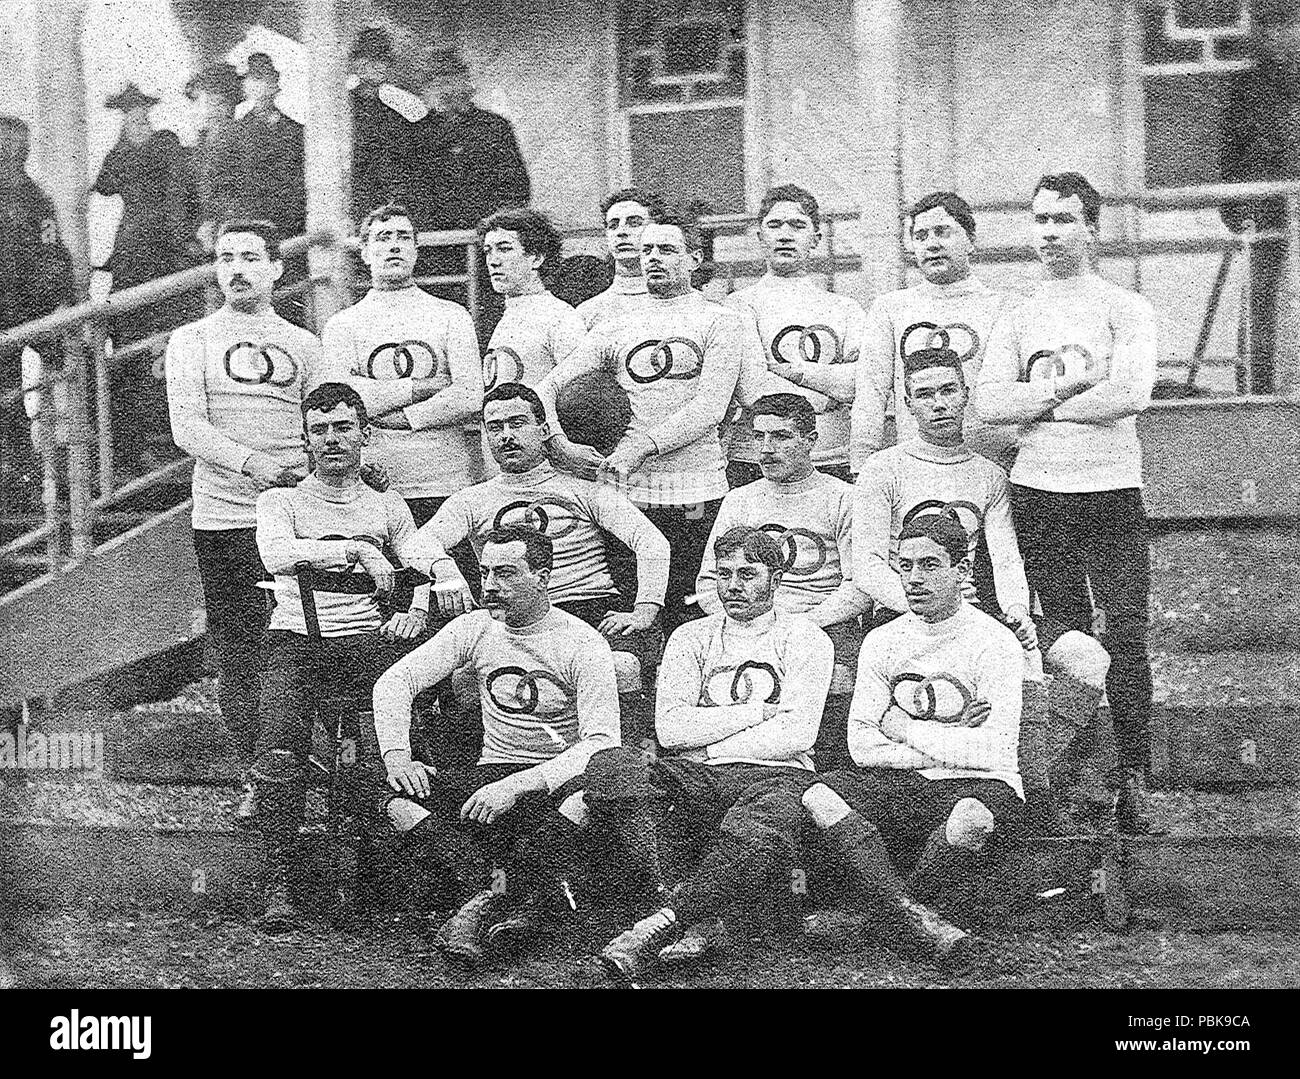 876 L'équipe de 'l'Unione' de l'U.S.F.S.A., en tournée en Angleterre en février 1893 (avec le ballon F. Reichel) Foto Stock